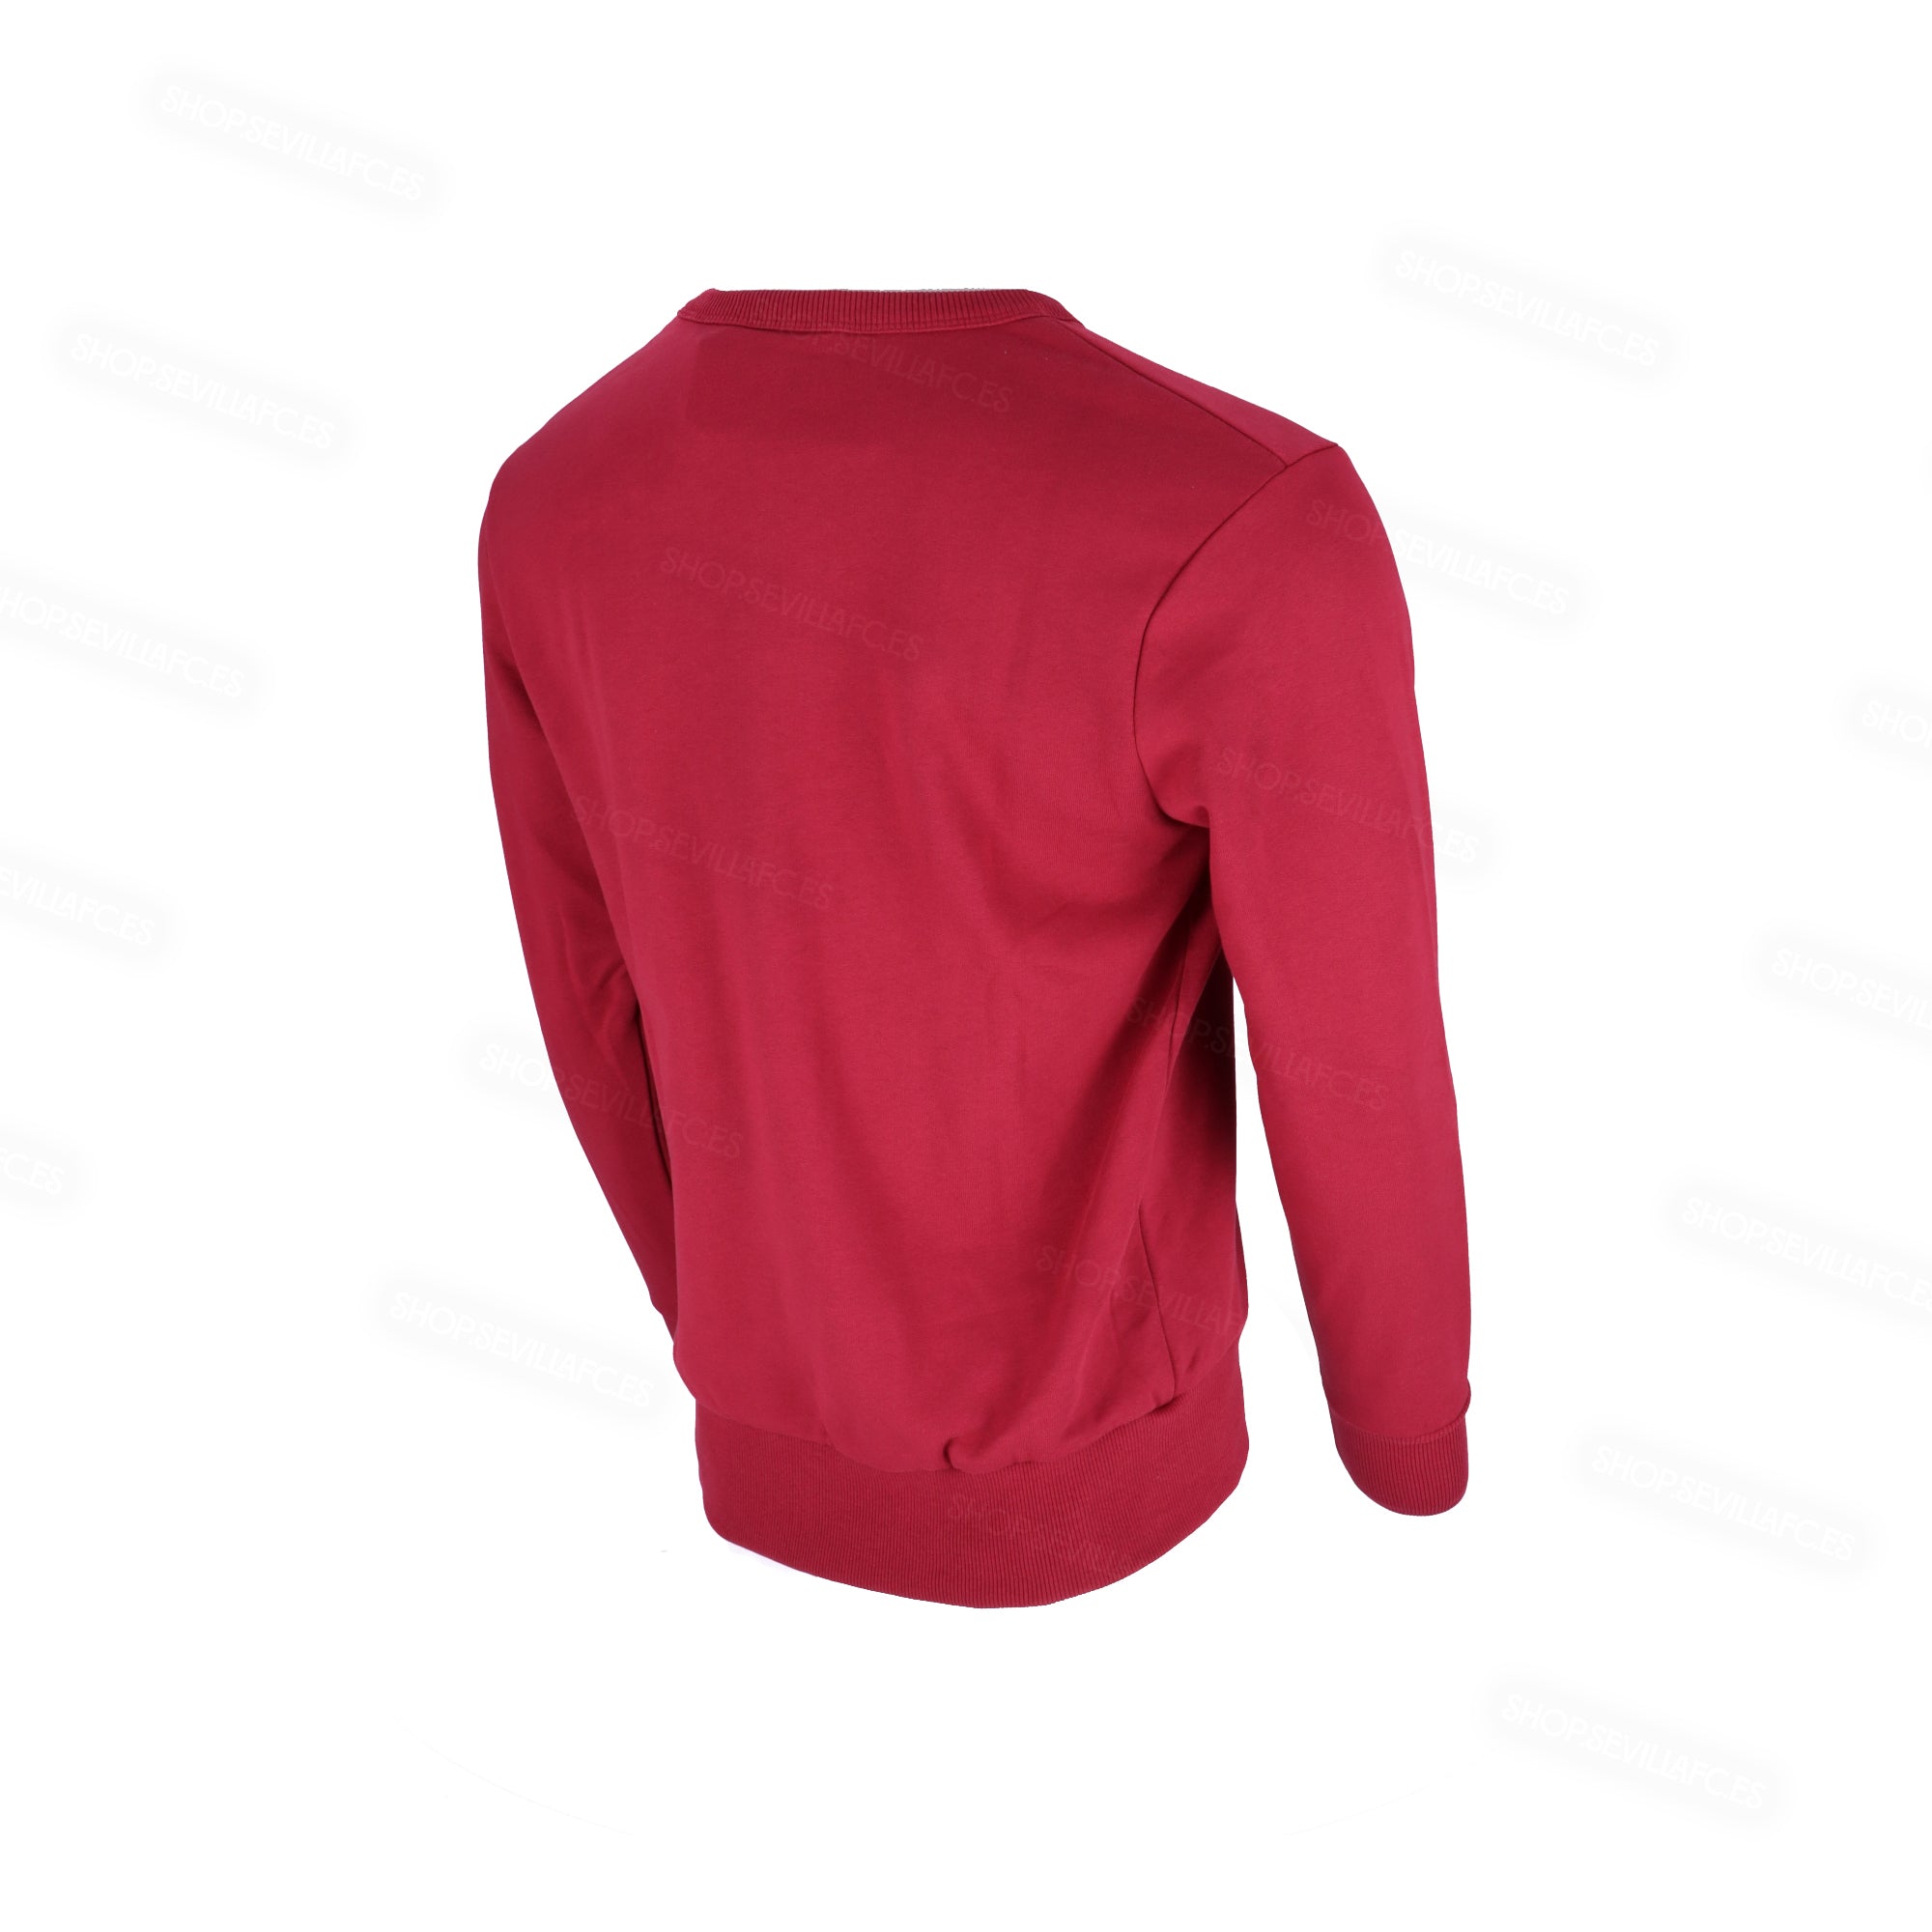 ‘1890’ Red and White Family Sweatshirt